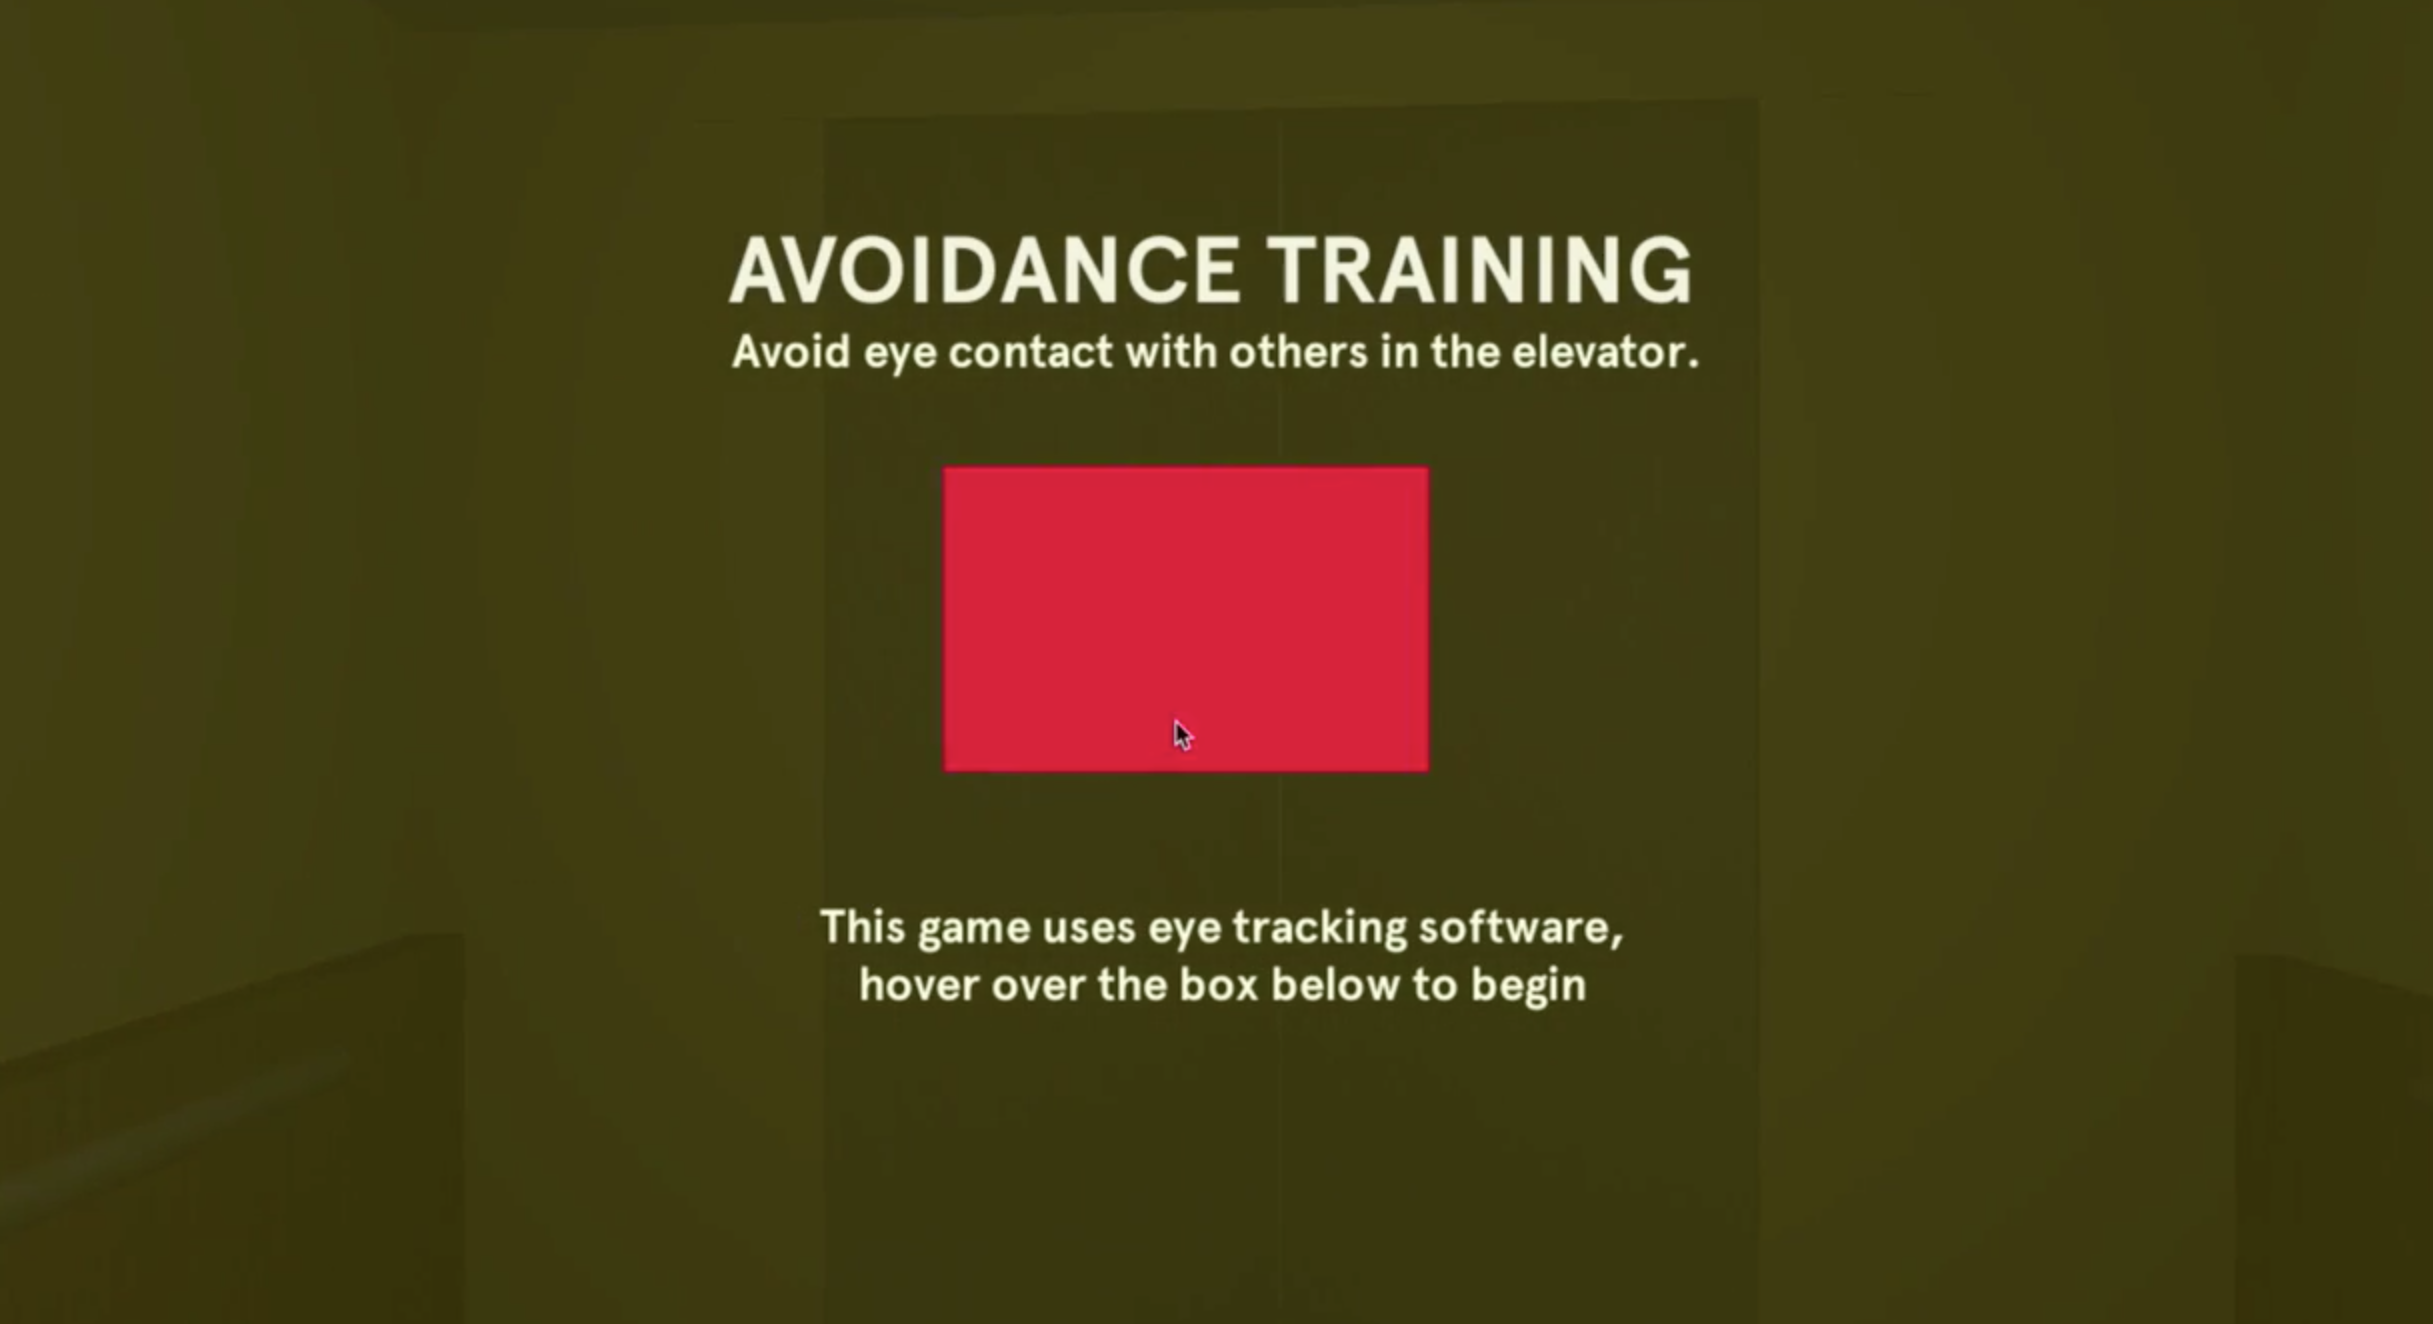 Avoidance training game designed by Rachel Knoll